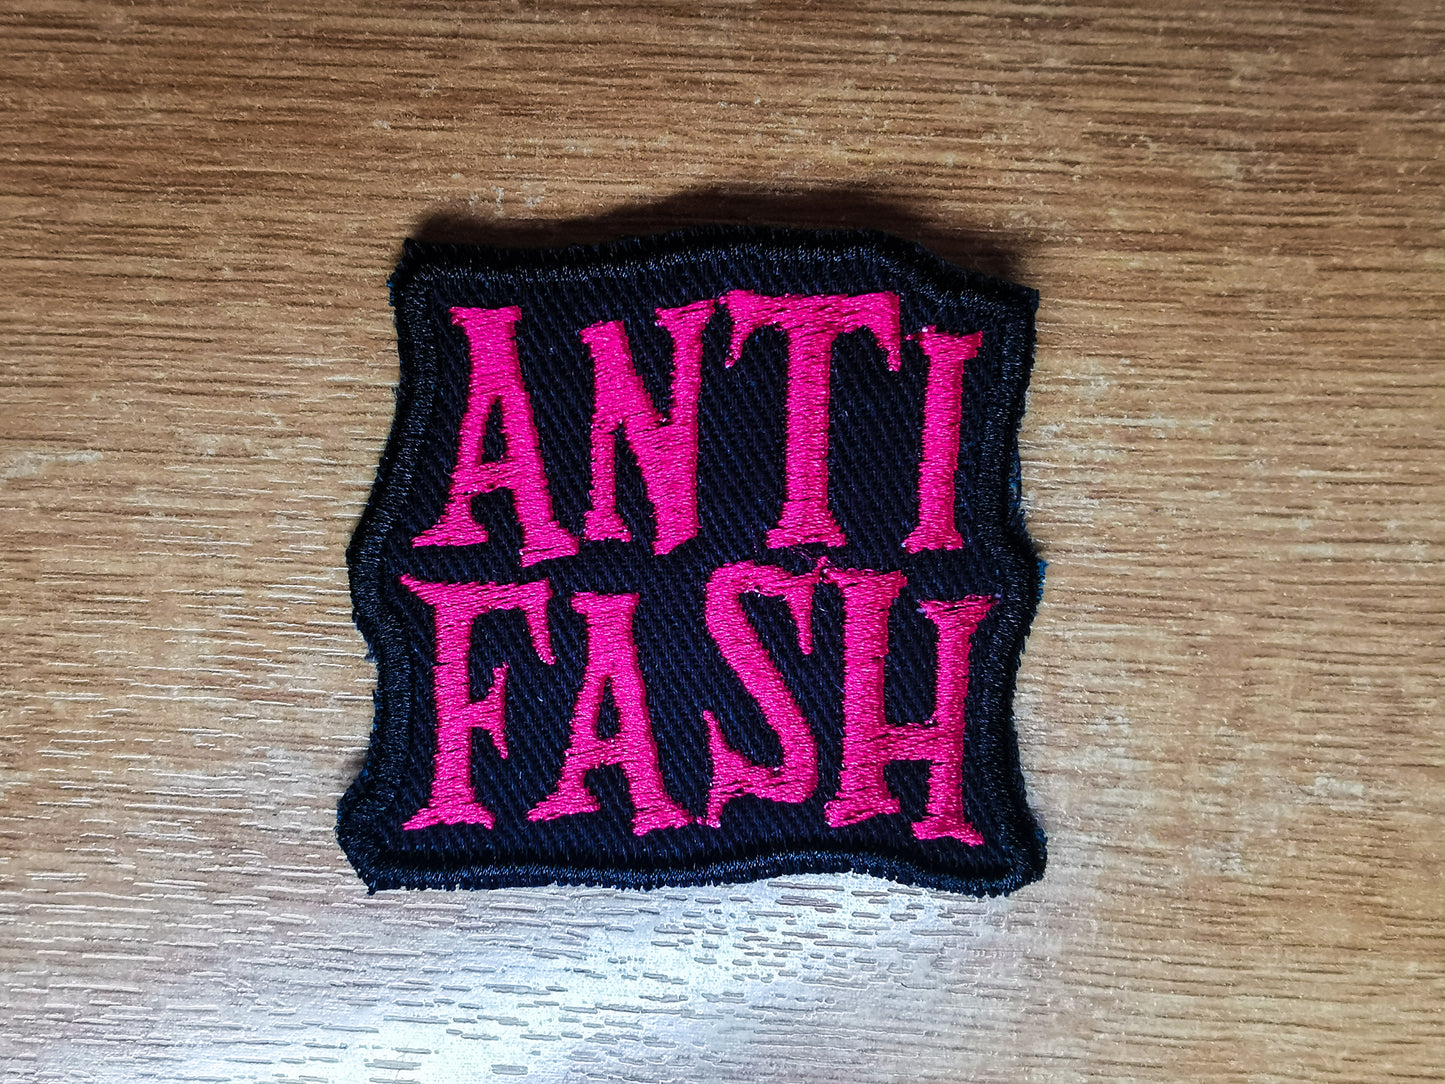 Anti Fash Antifacist Embroidered Patch Politics Punk